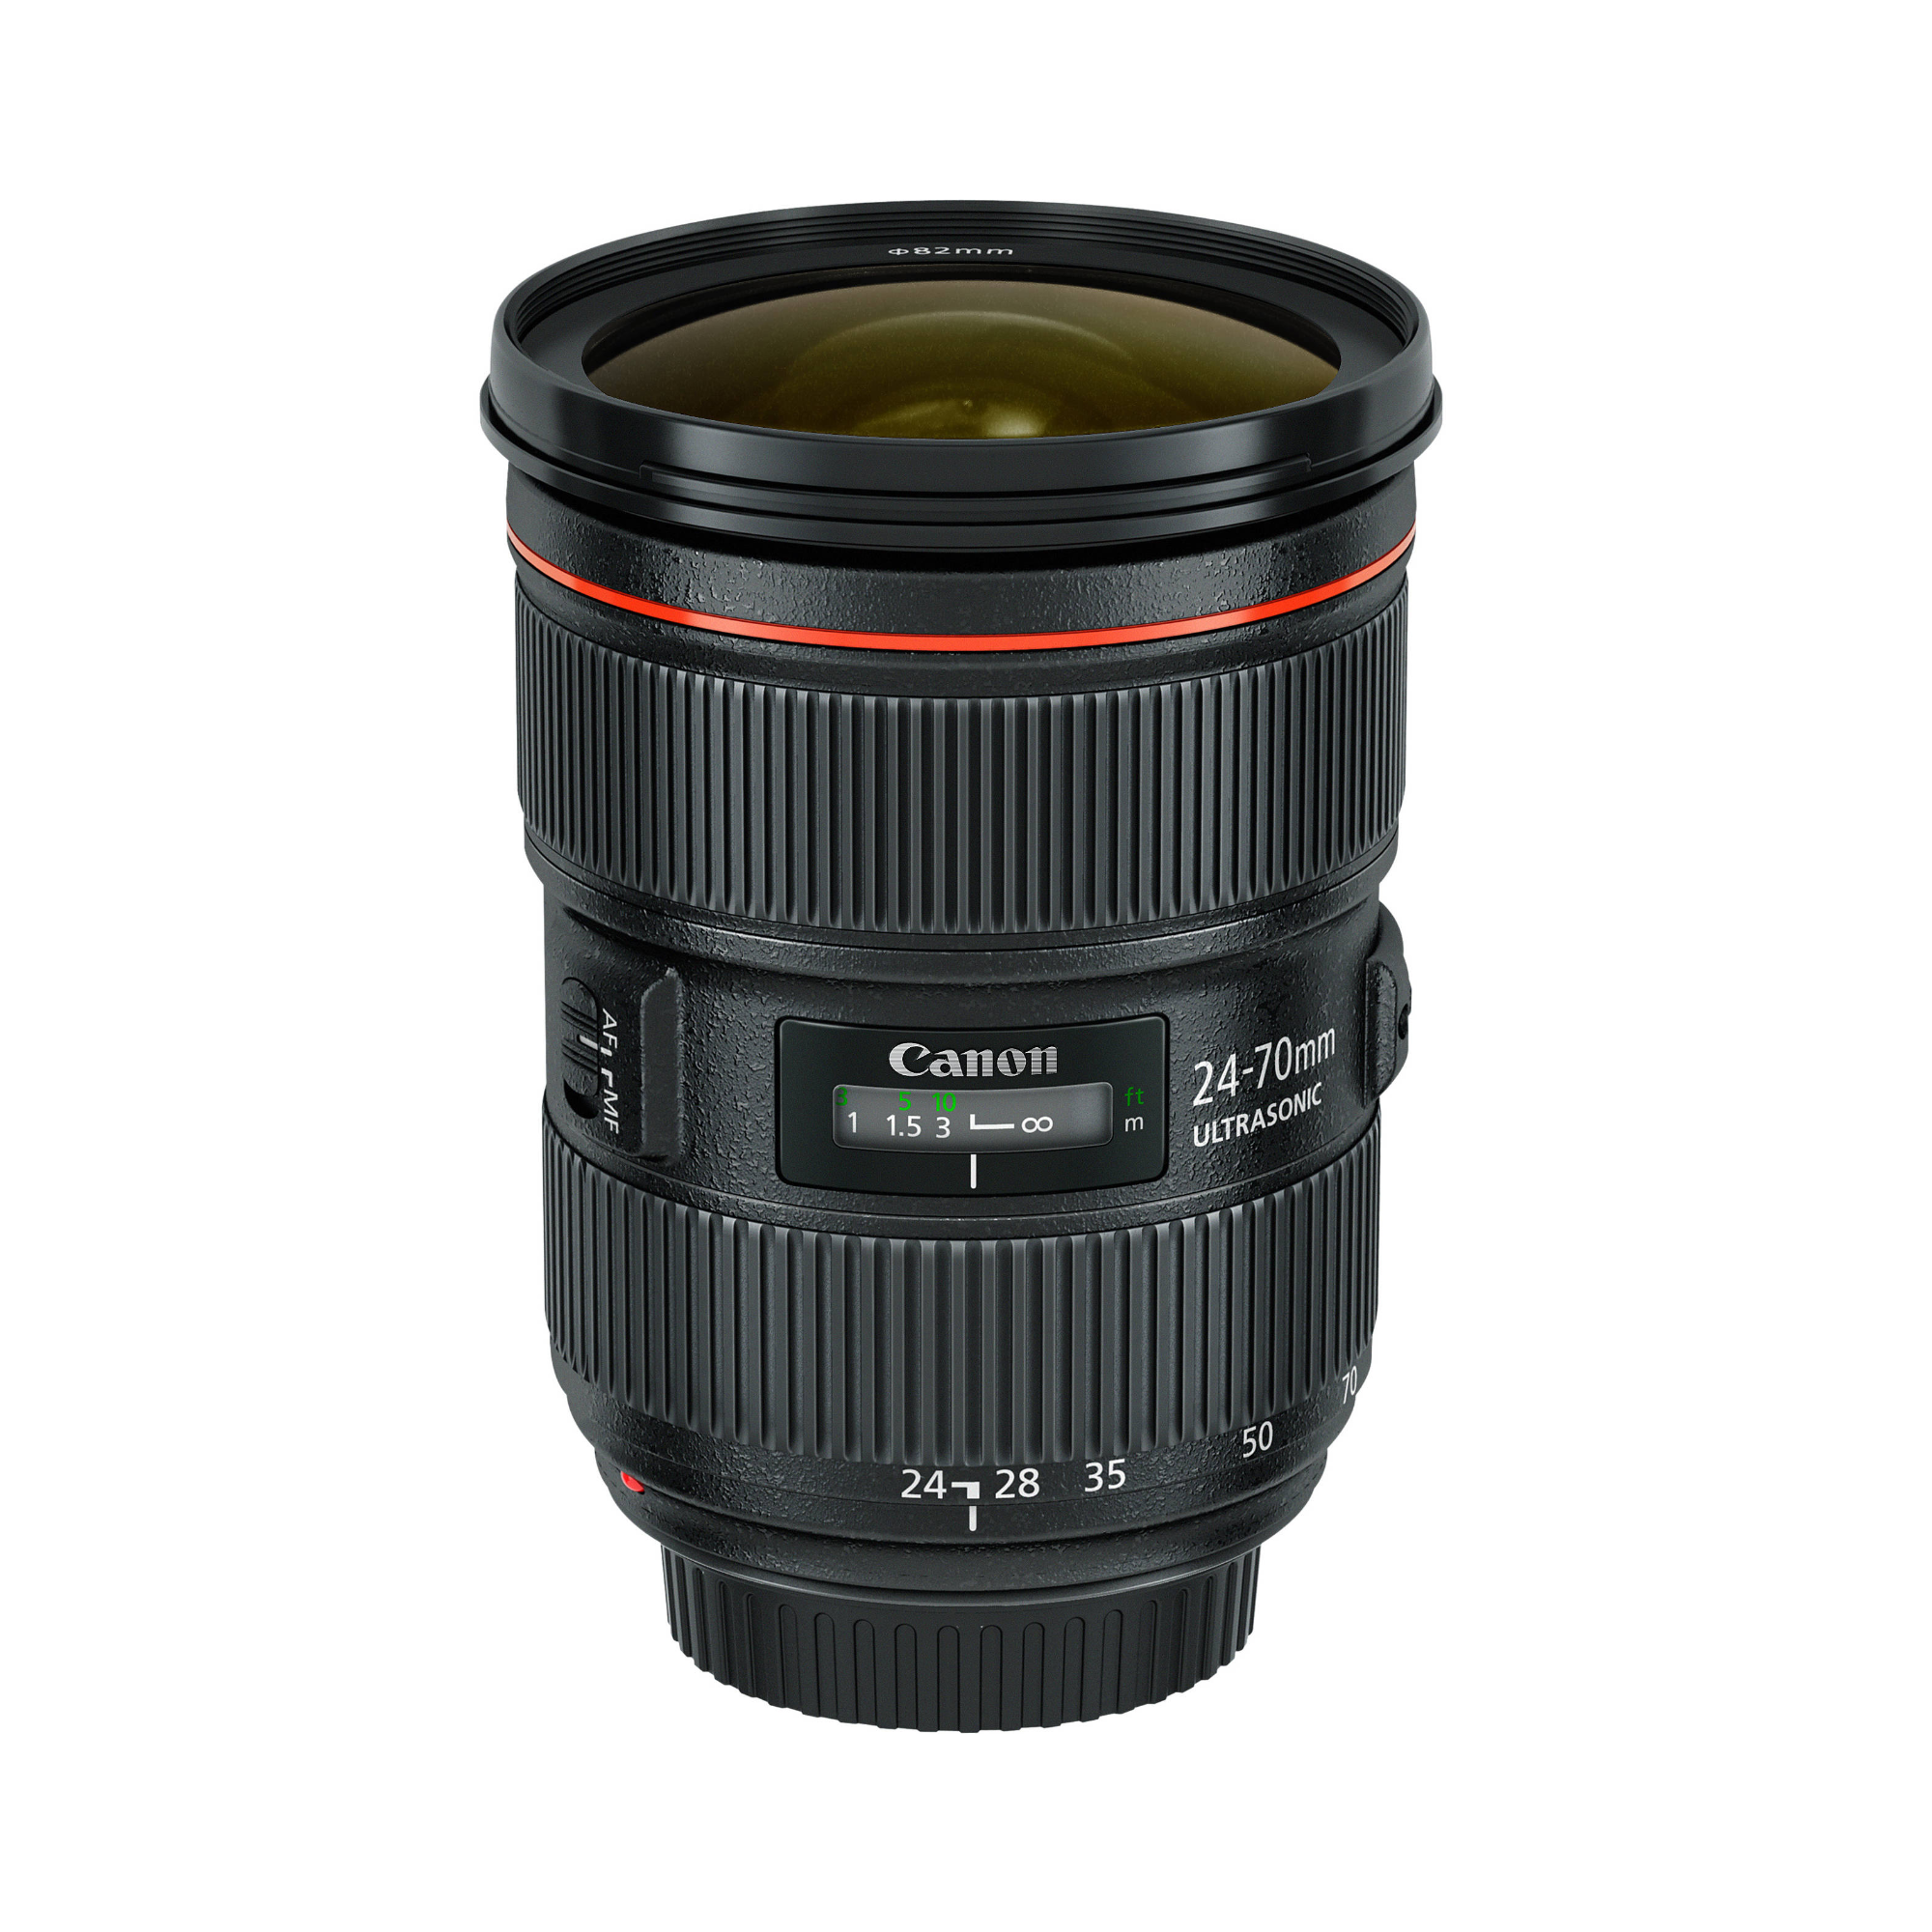 USED Canon EF 24-70mm f/2.8L II USM Lens